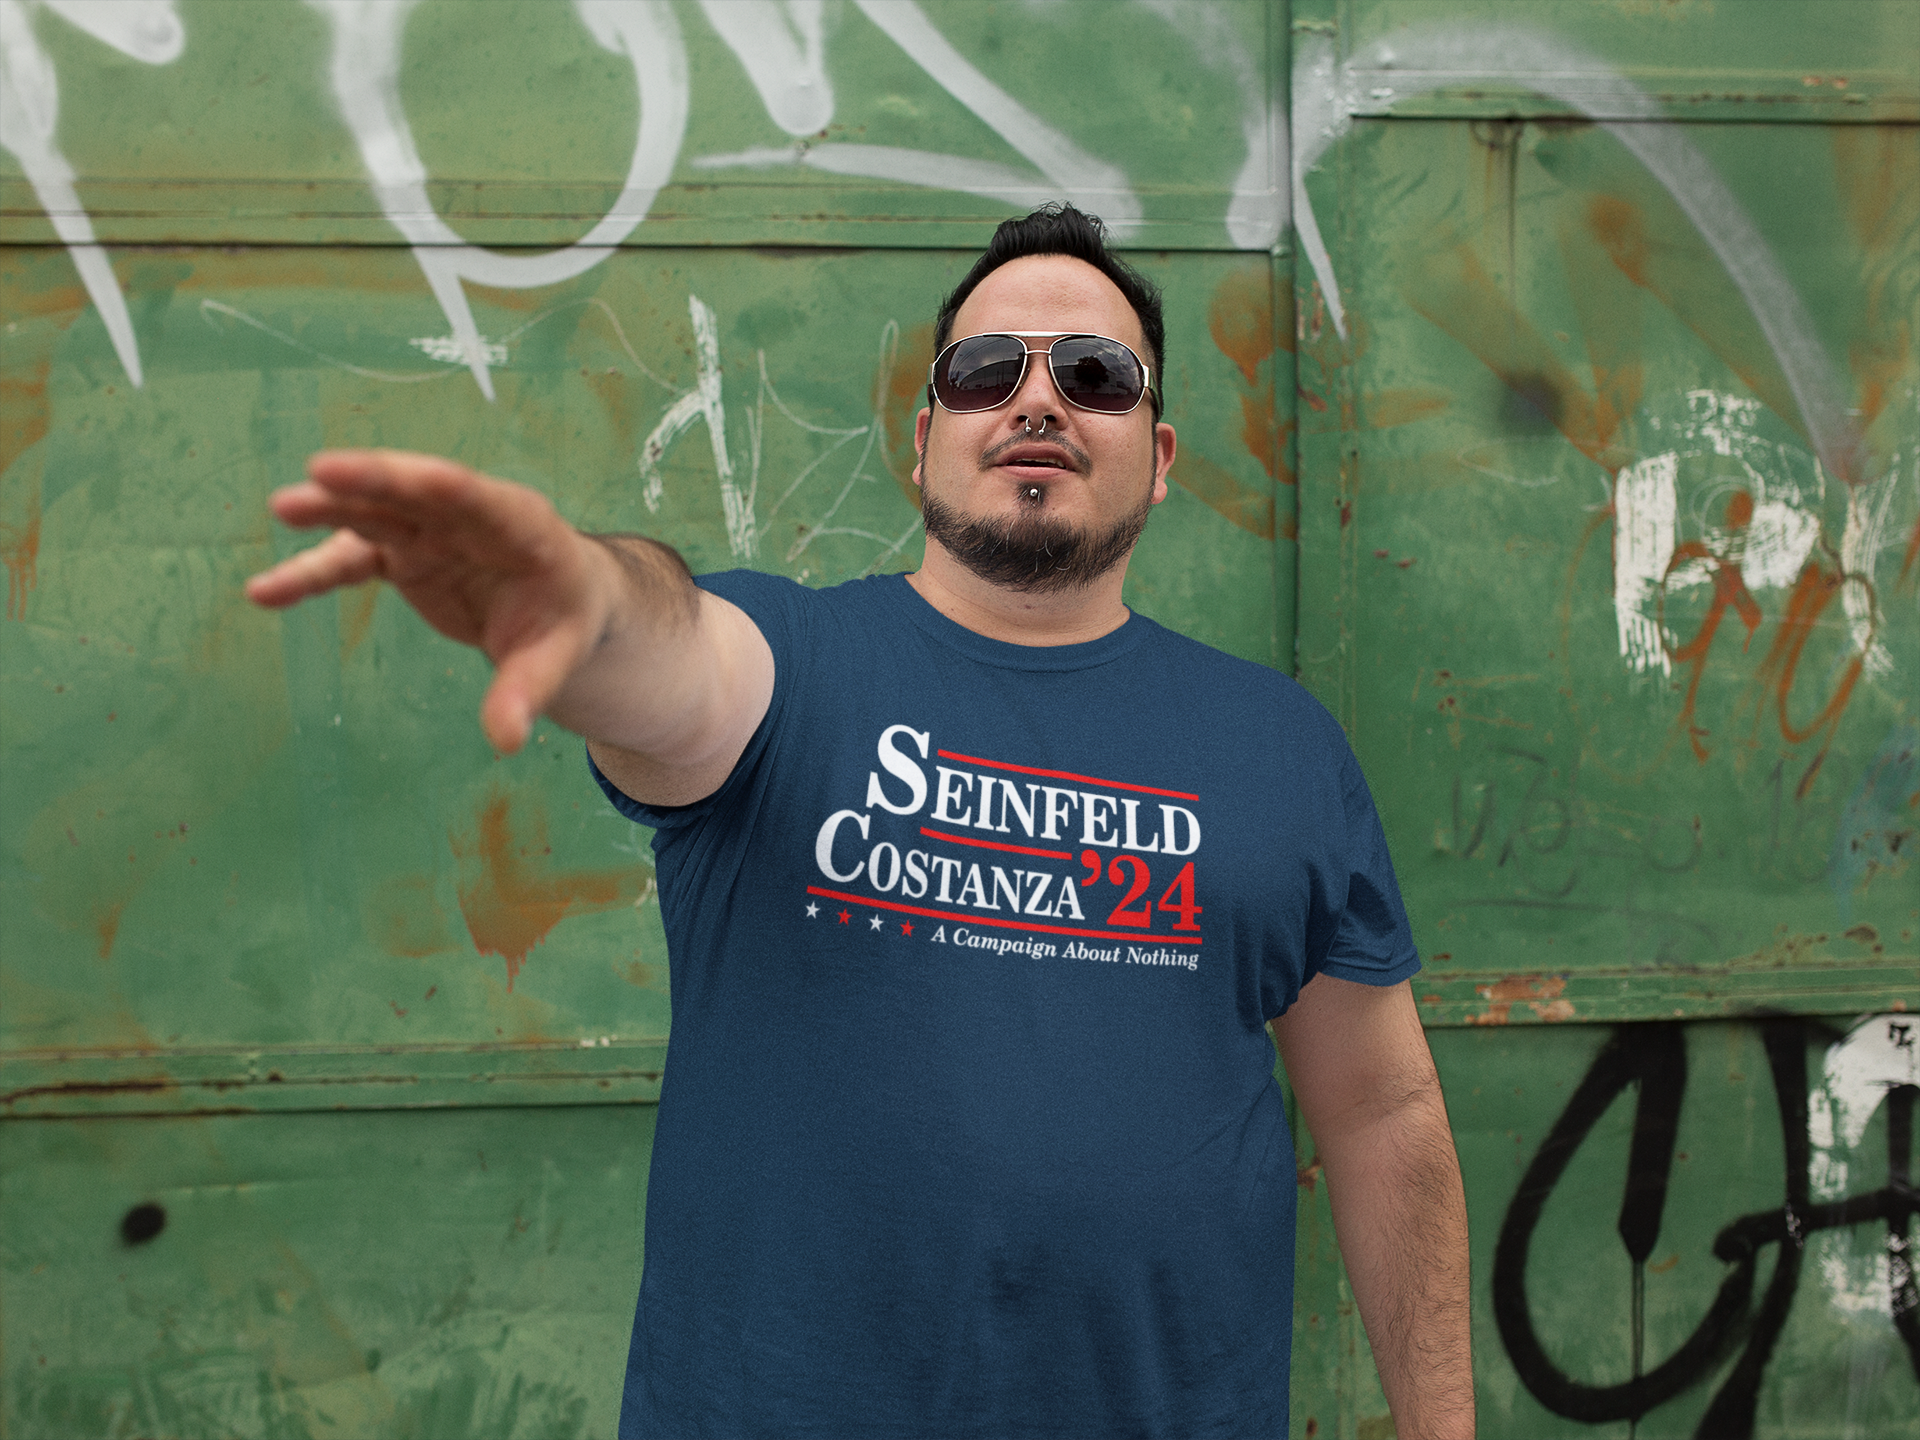 Seinfeld Costanza 24 Election T Shirt